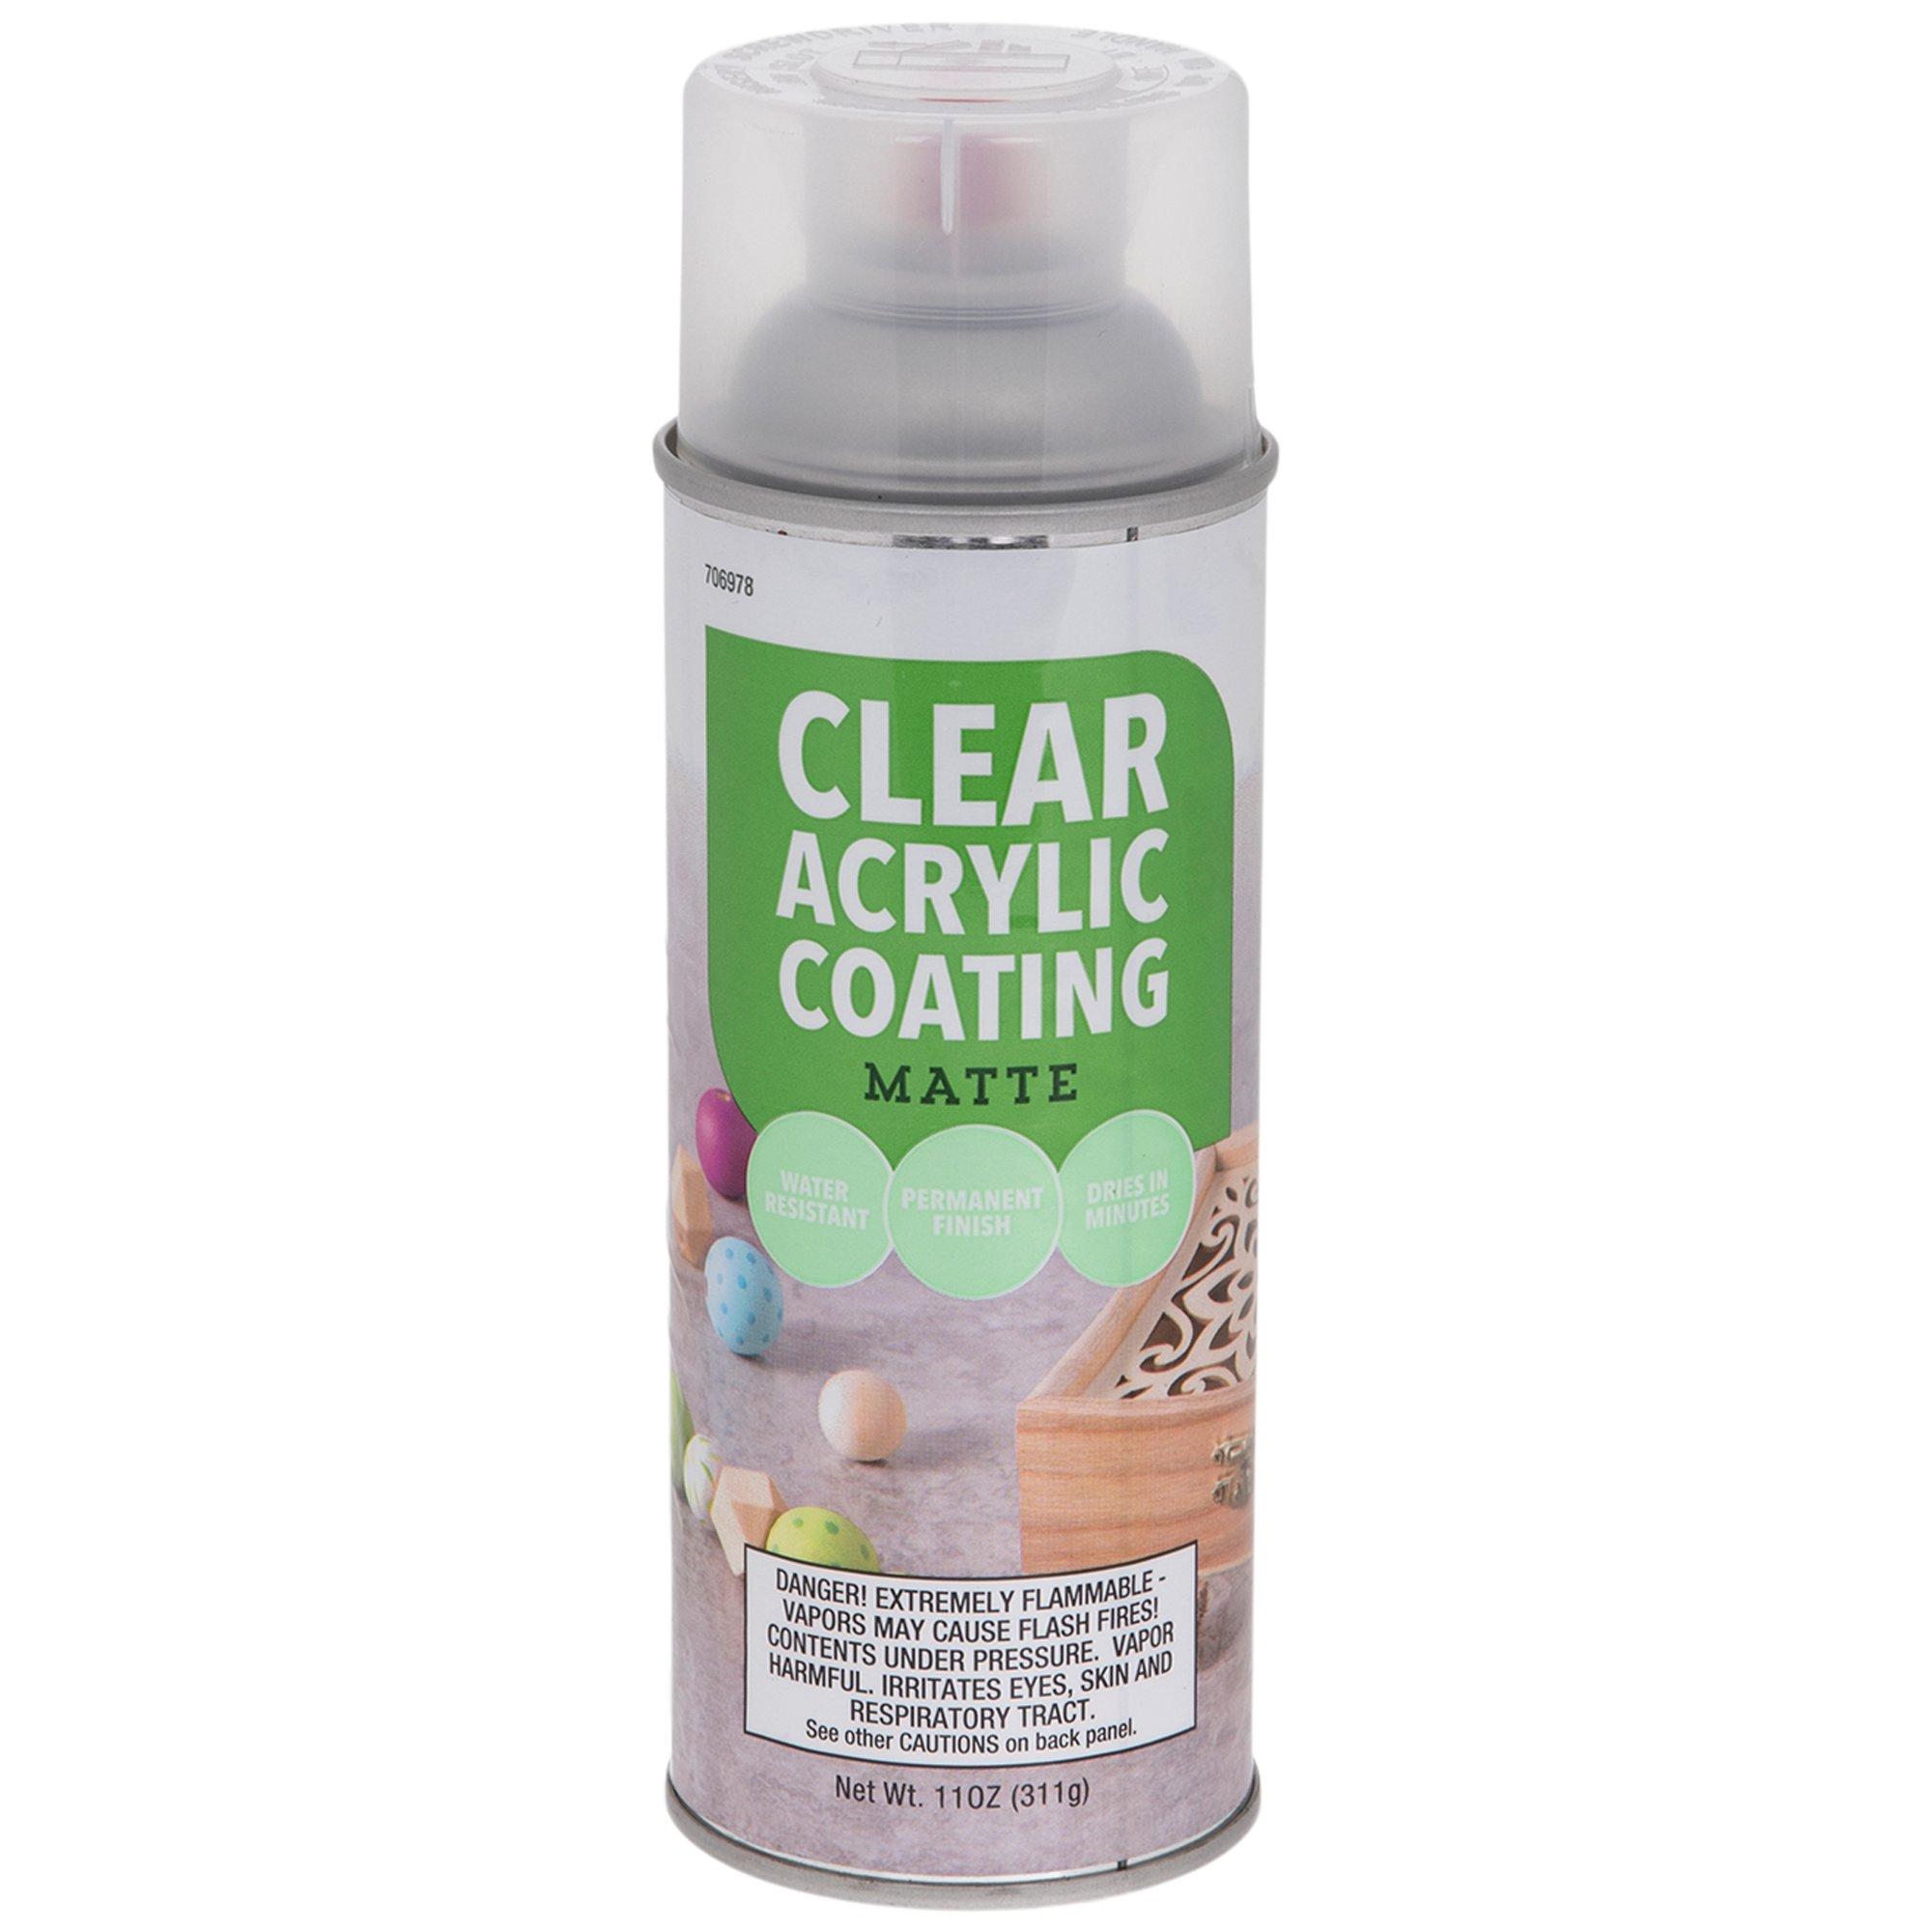 Clear Acrylic Coating Spray Lacquer, Hobby Lobby